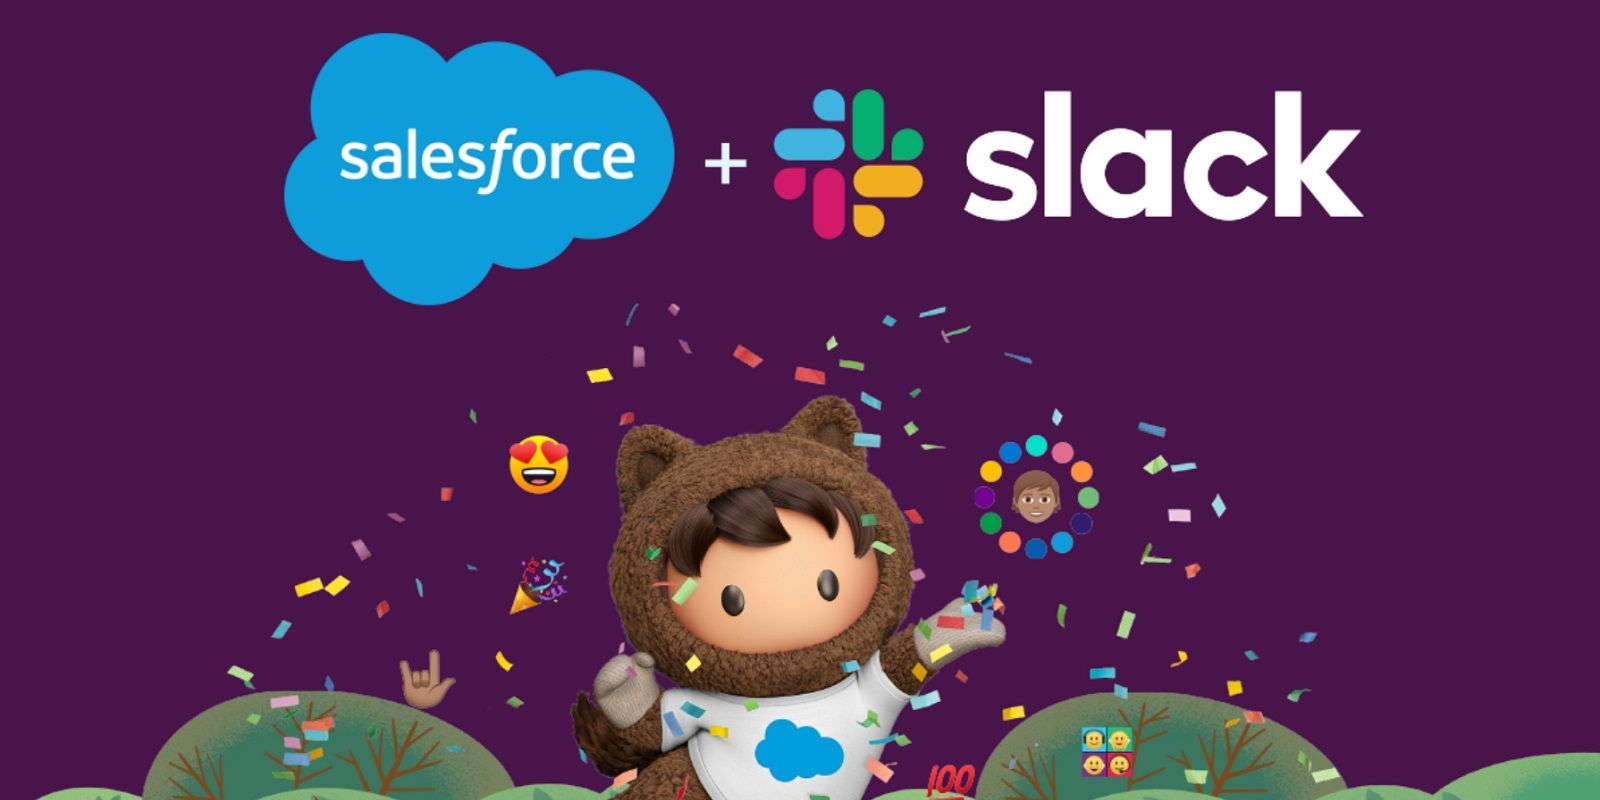 Salesforce buys Slack